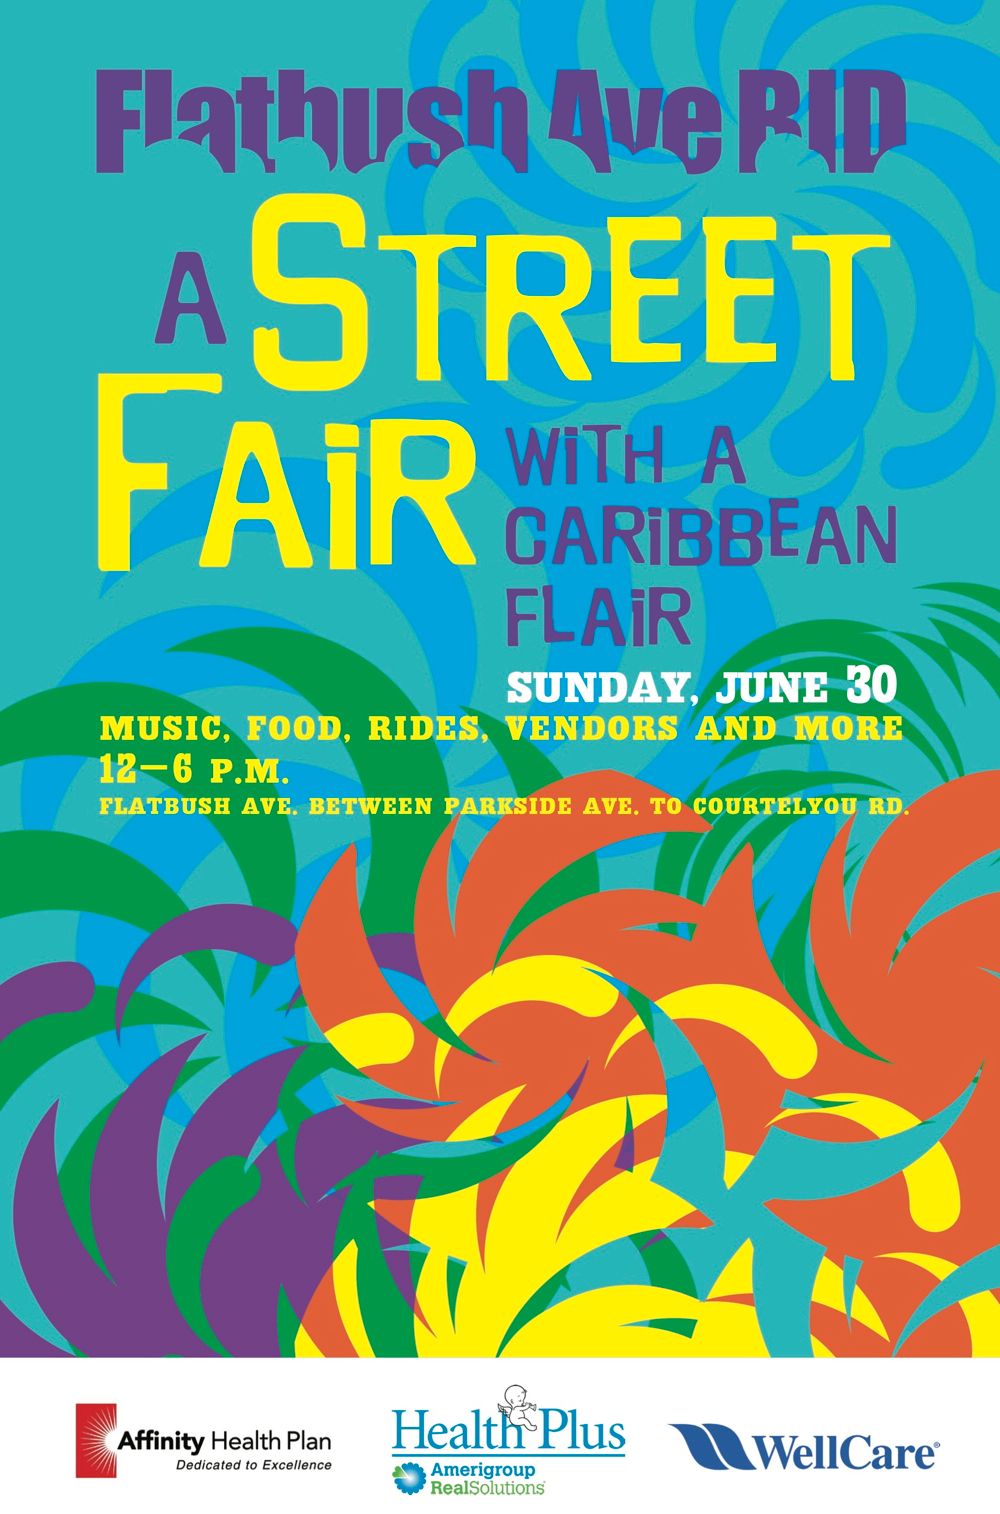 Flatbush Avenue Street Fair Is On Sunday, June 30